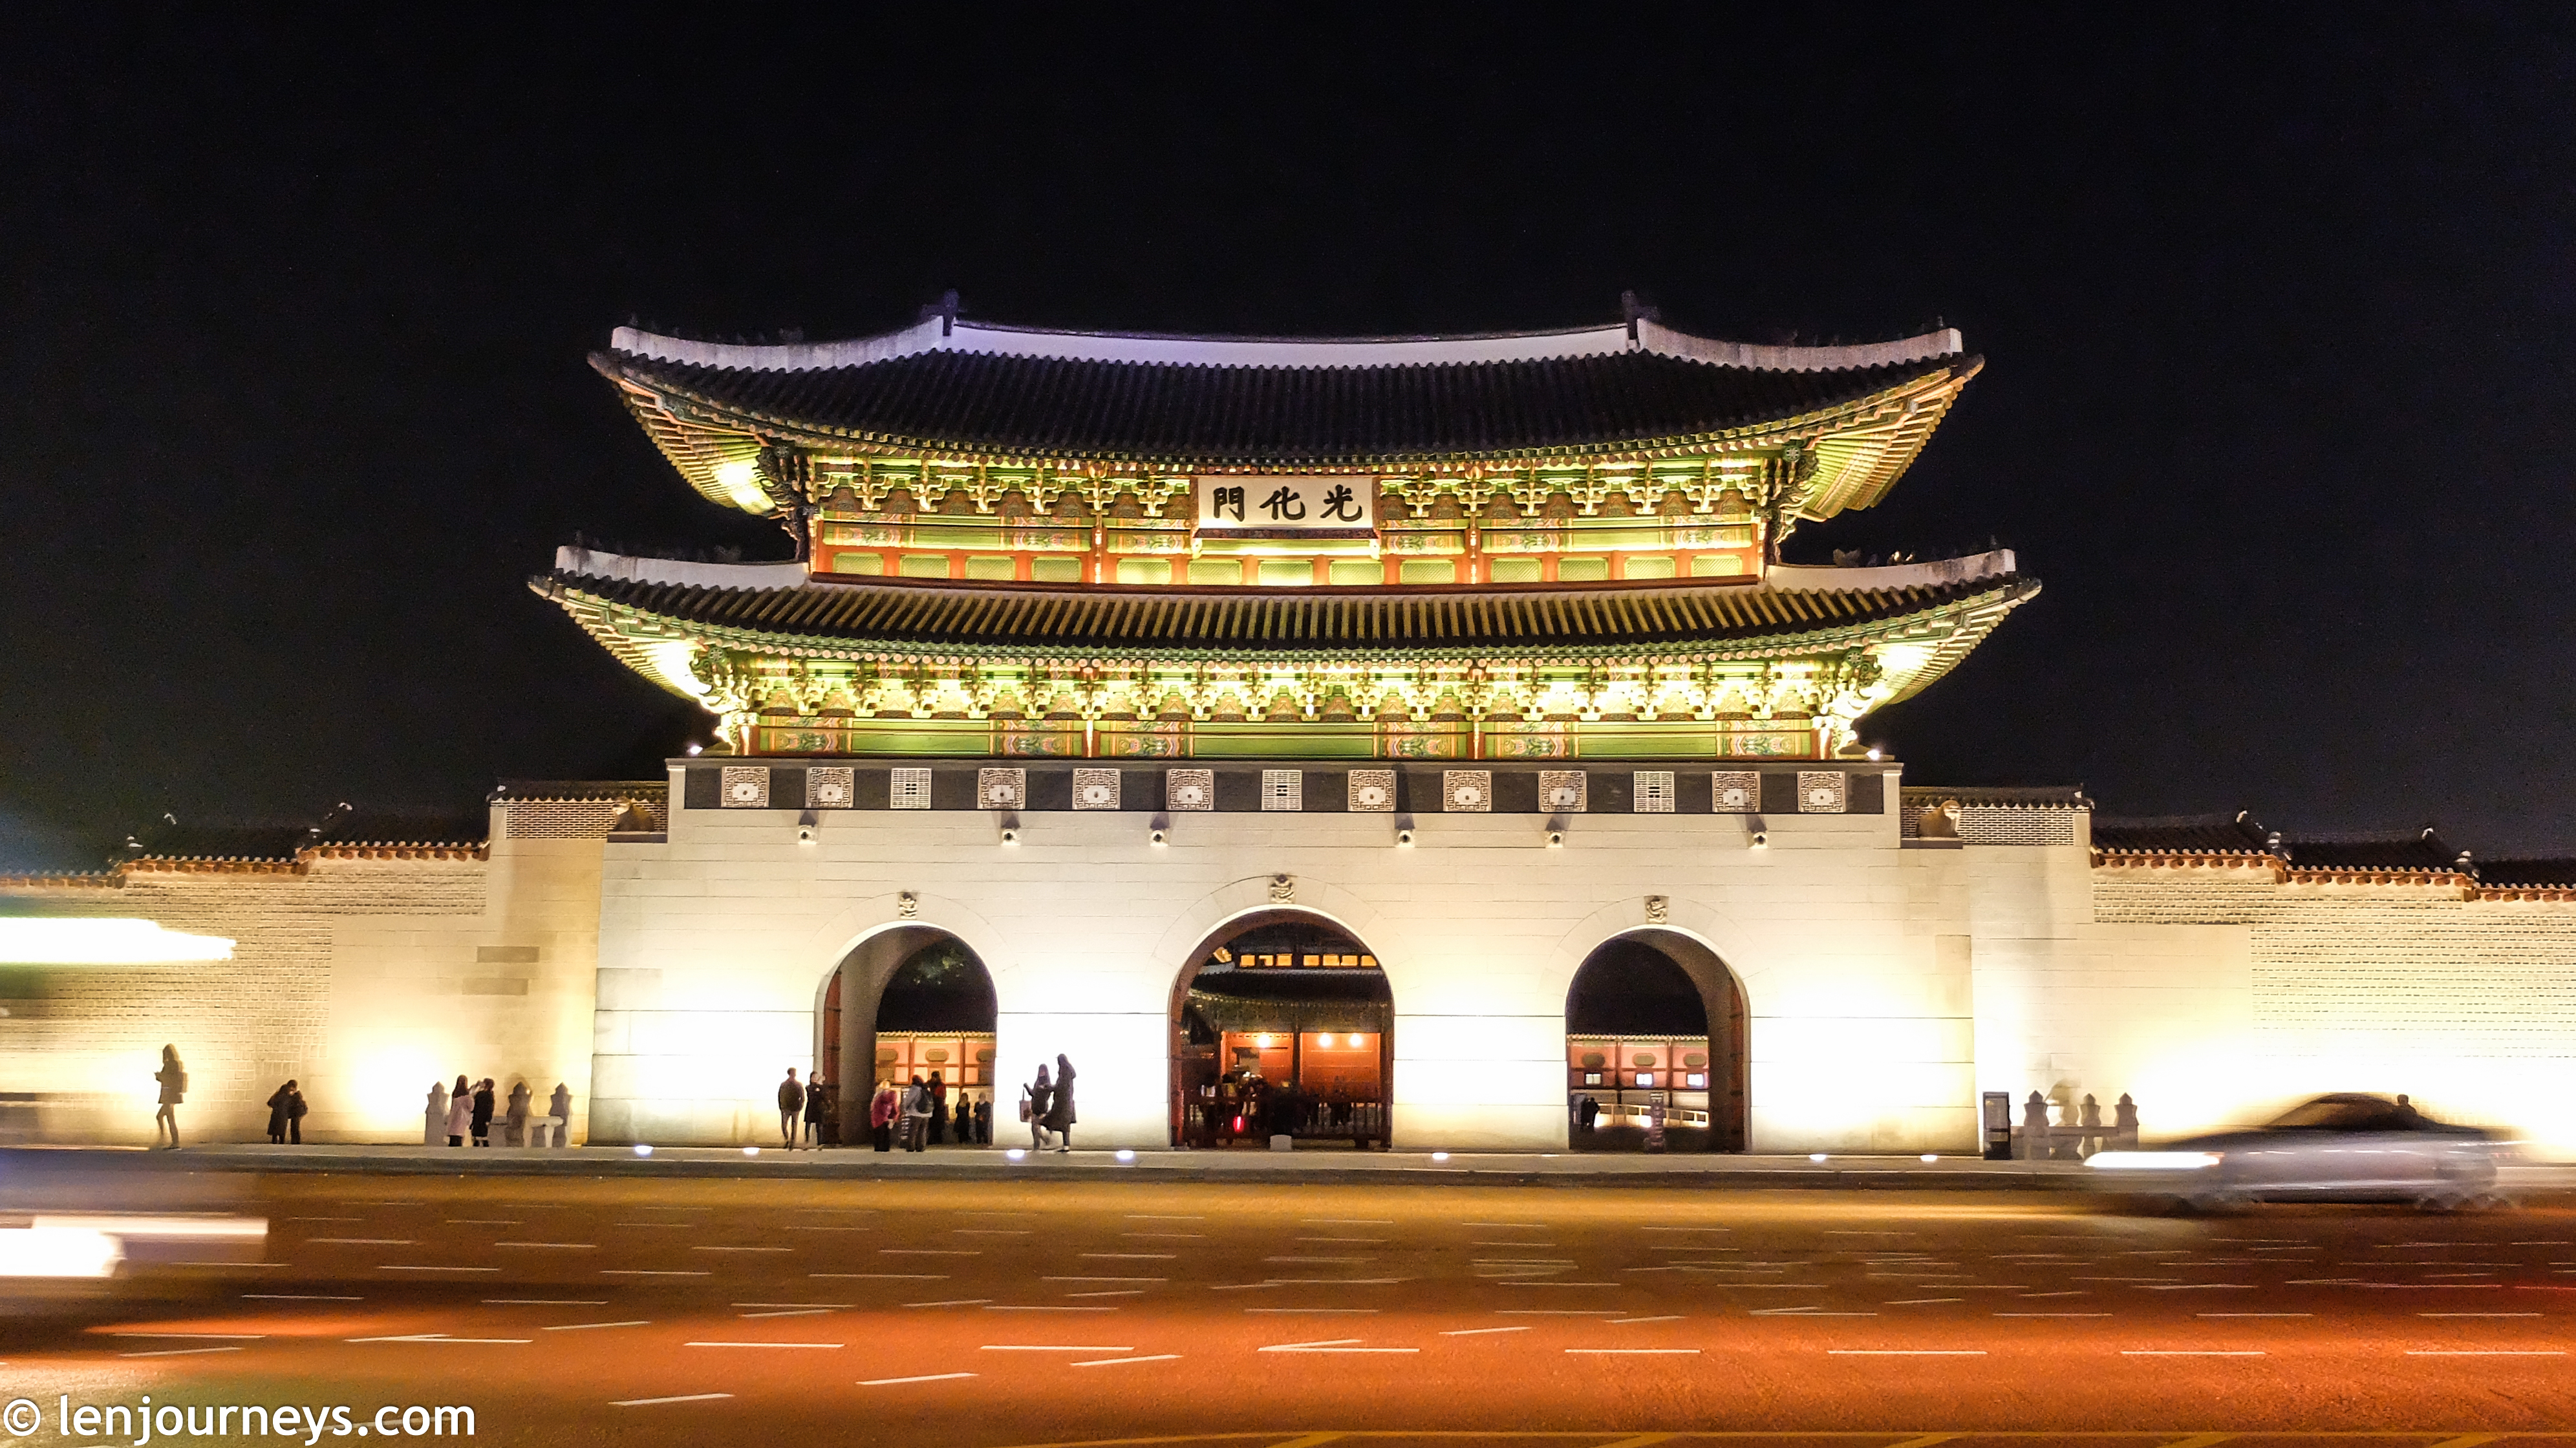 Gwanghwamun - The palace's main entrance